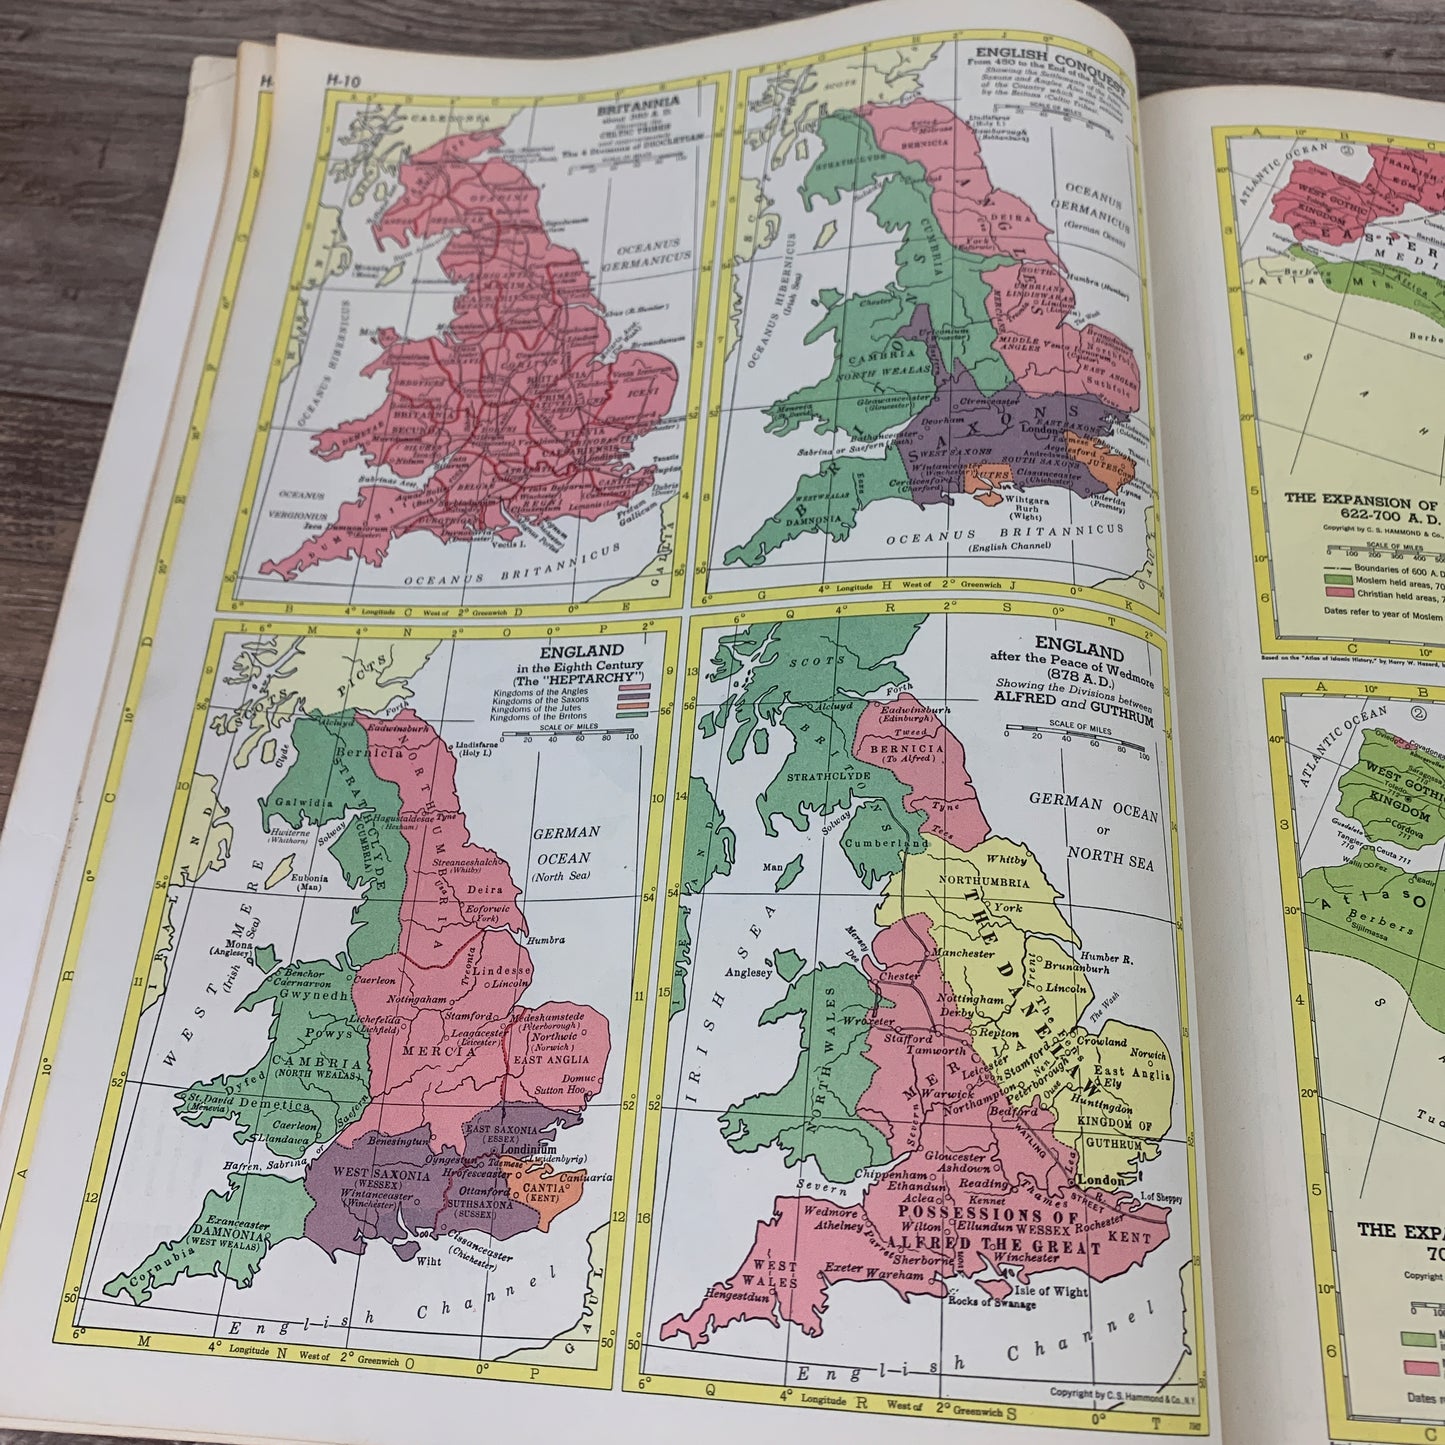 Hammond's Historical Atlas 1957 Vintage School Atlas of Historical Maps